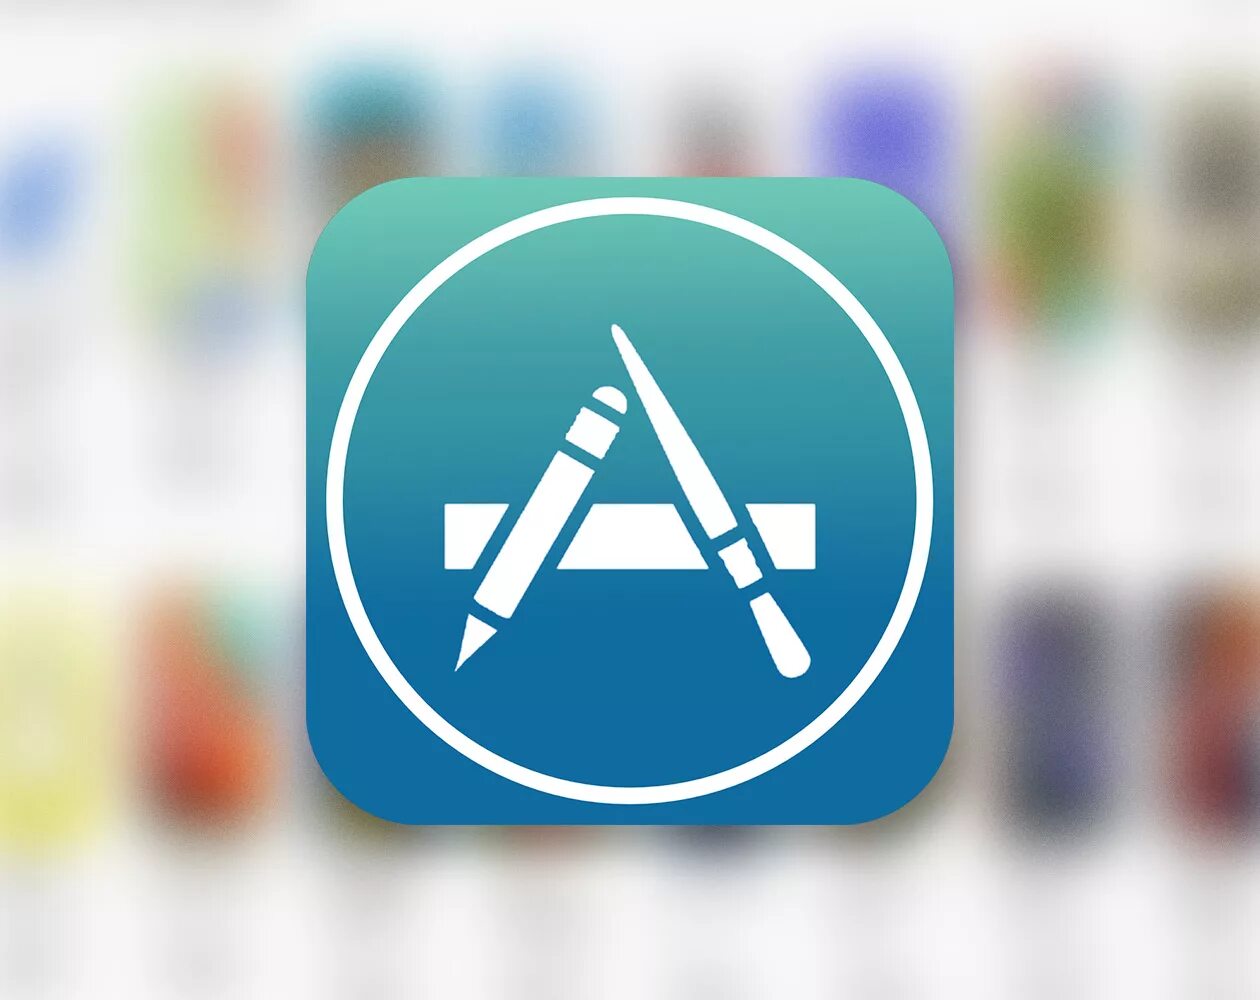 App store 5. App Store. Приложение в аппсторе. Значок app Store. Магазин приложений APPSTORE.